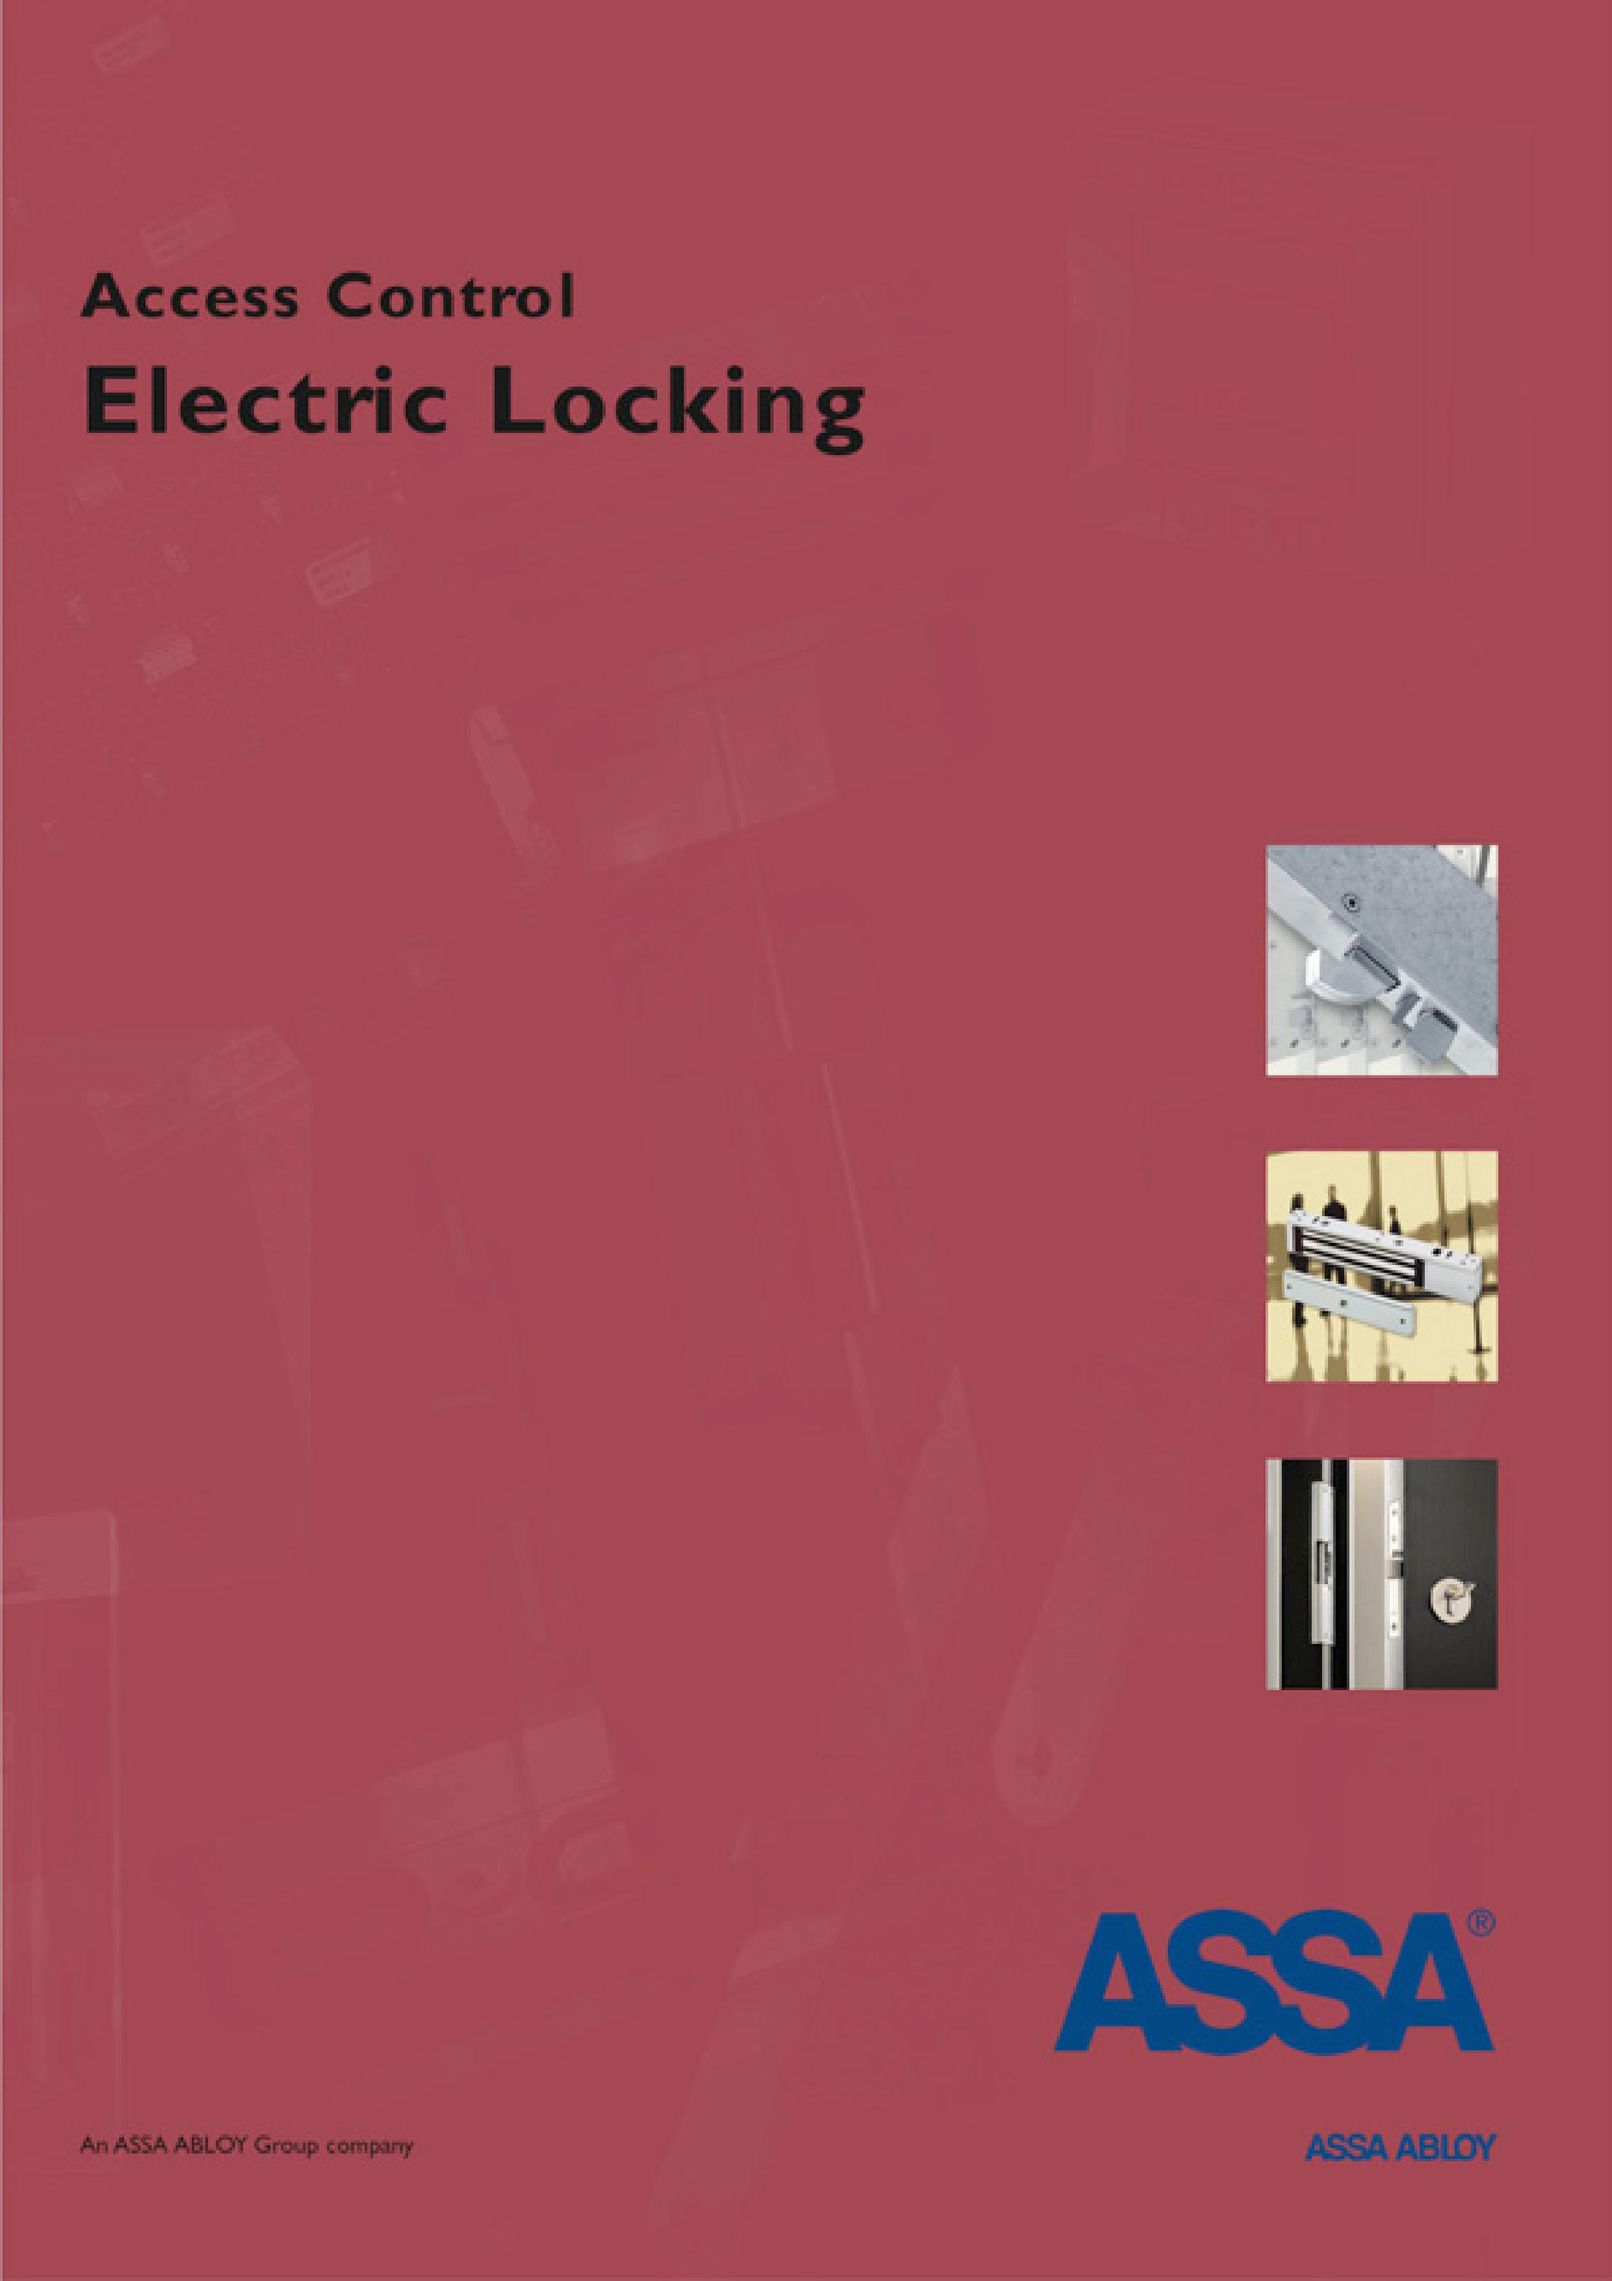 Assa Access Control Electric Locking Door User Manual